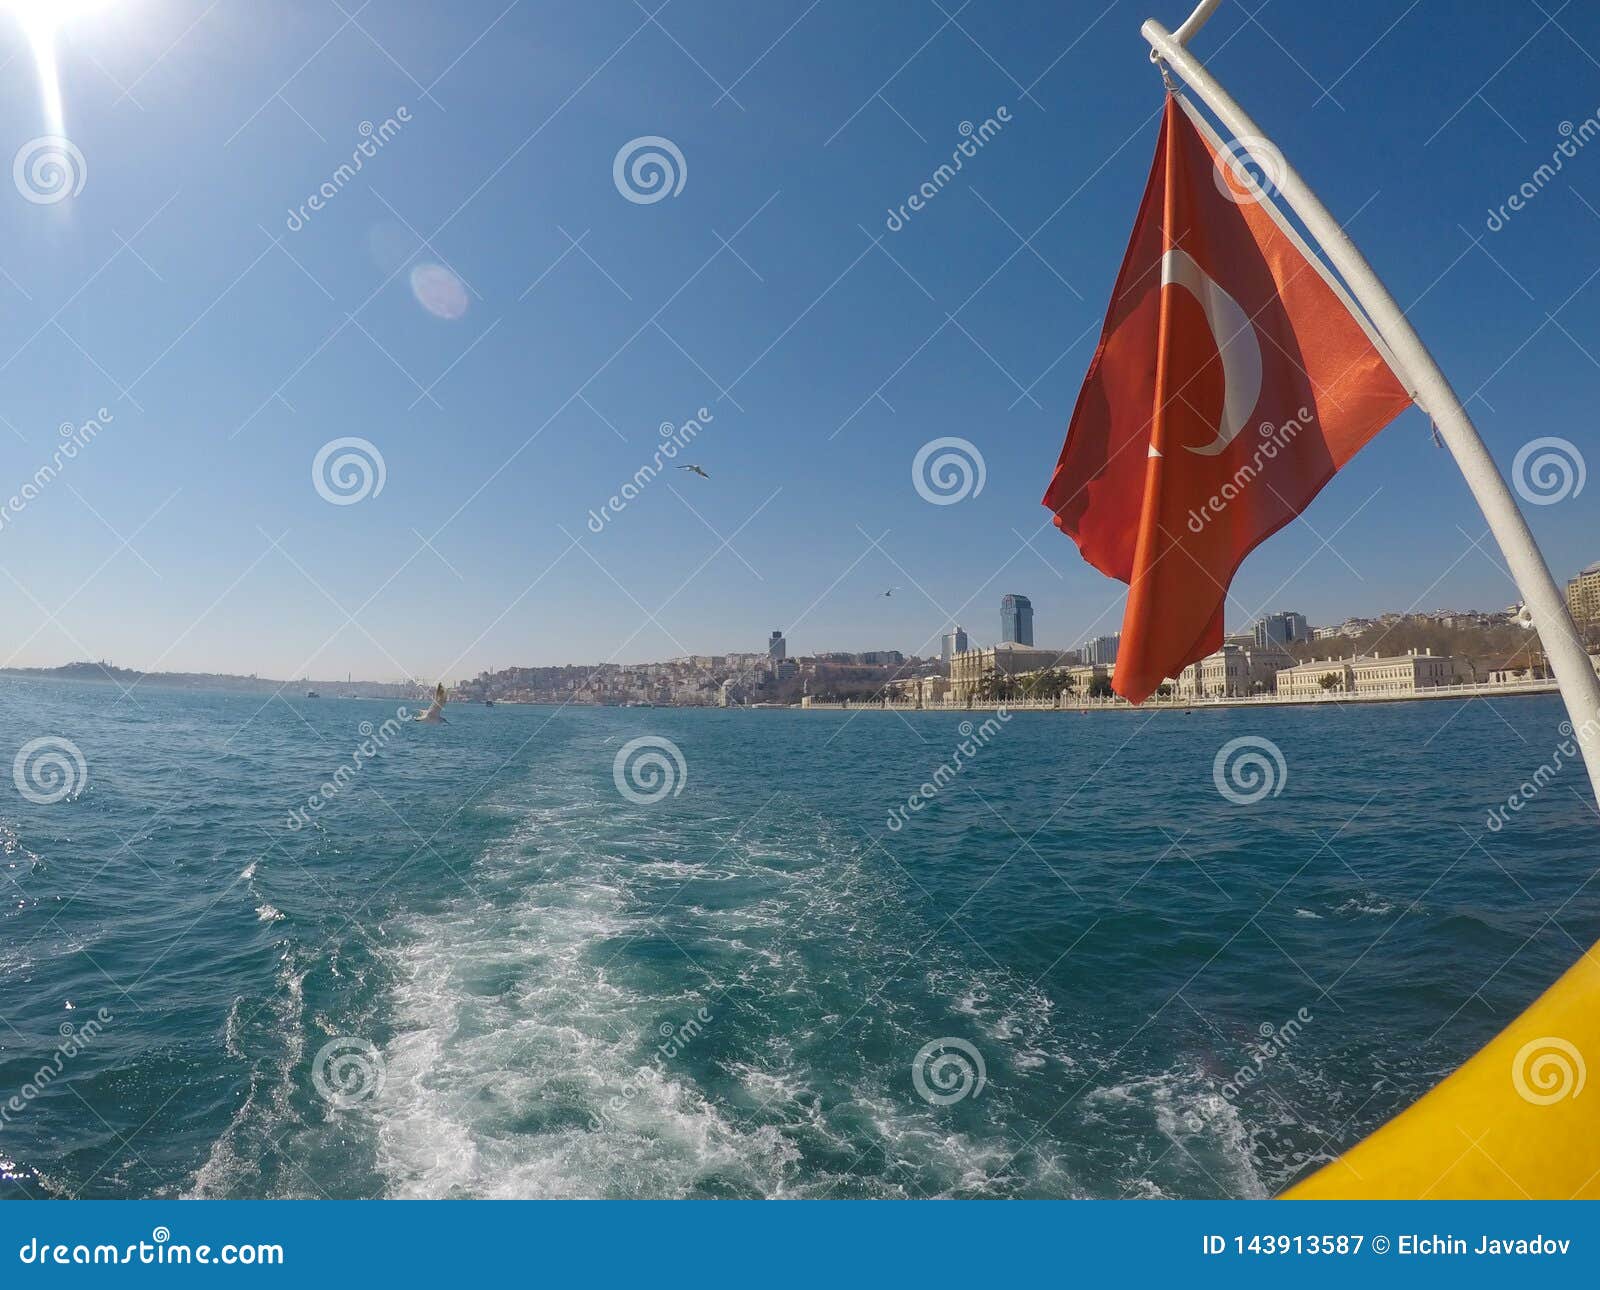 turkey flag in bosphorus at the turkish ship vapur